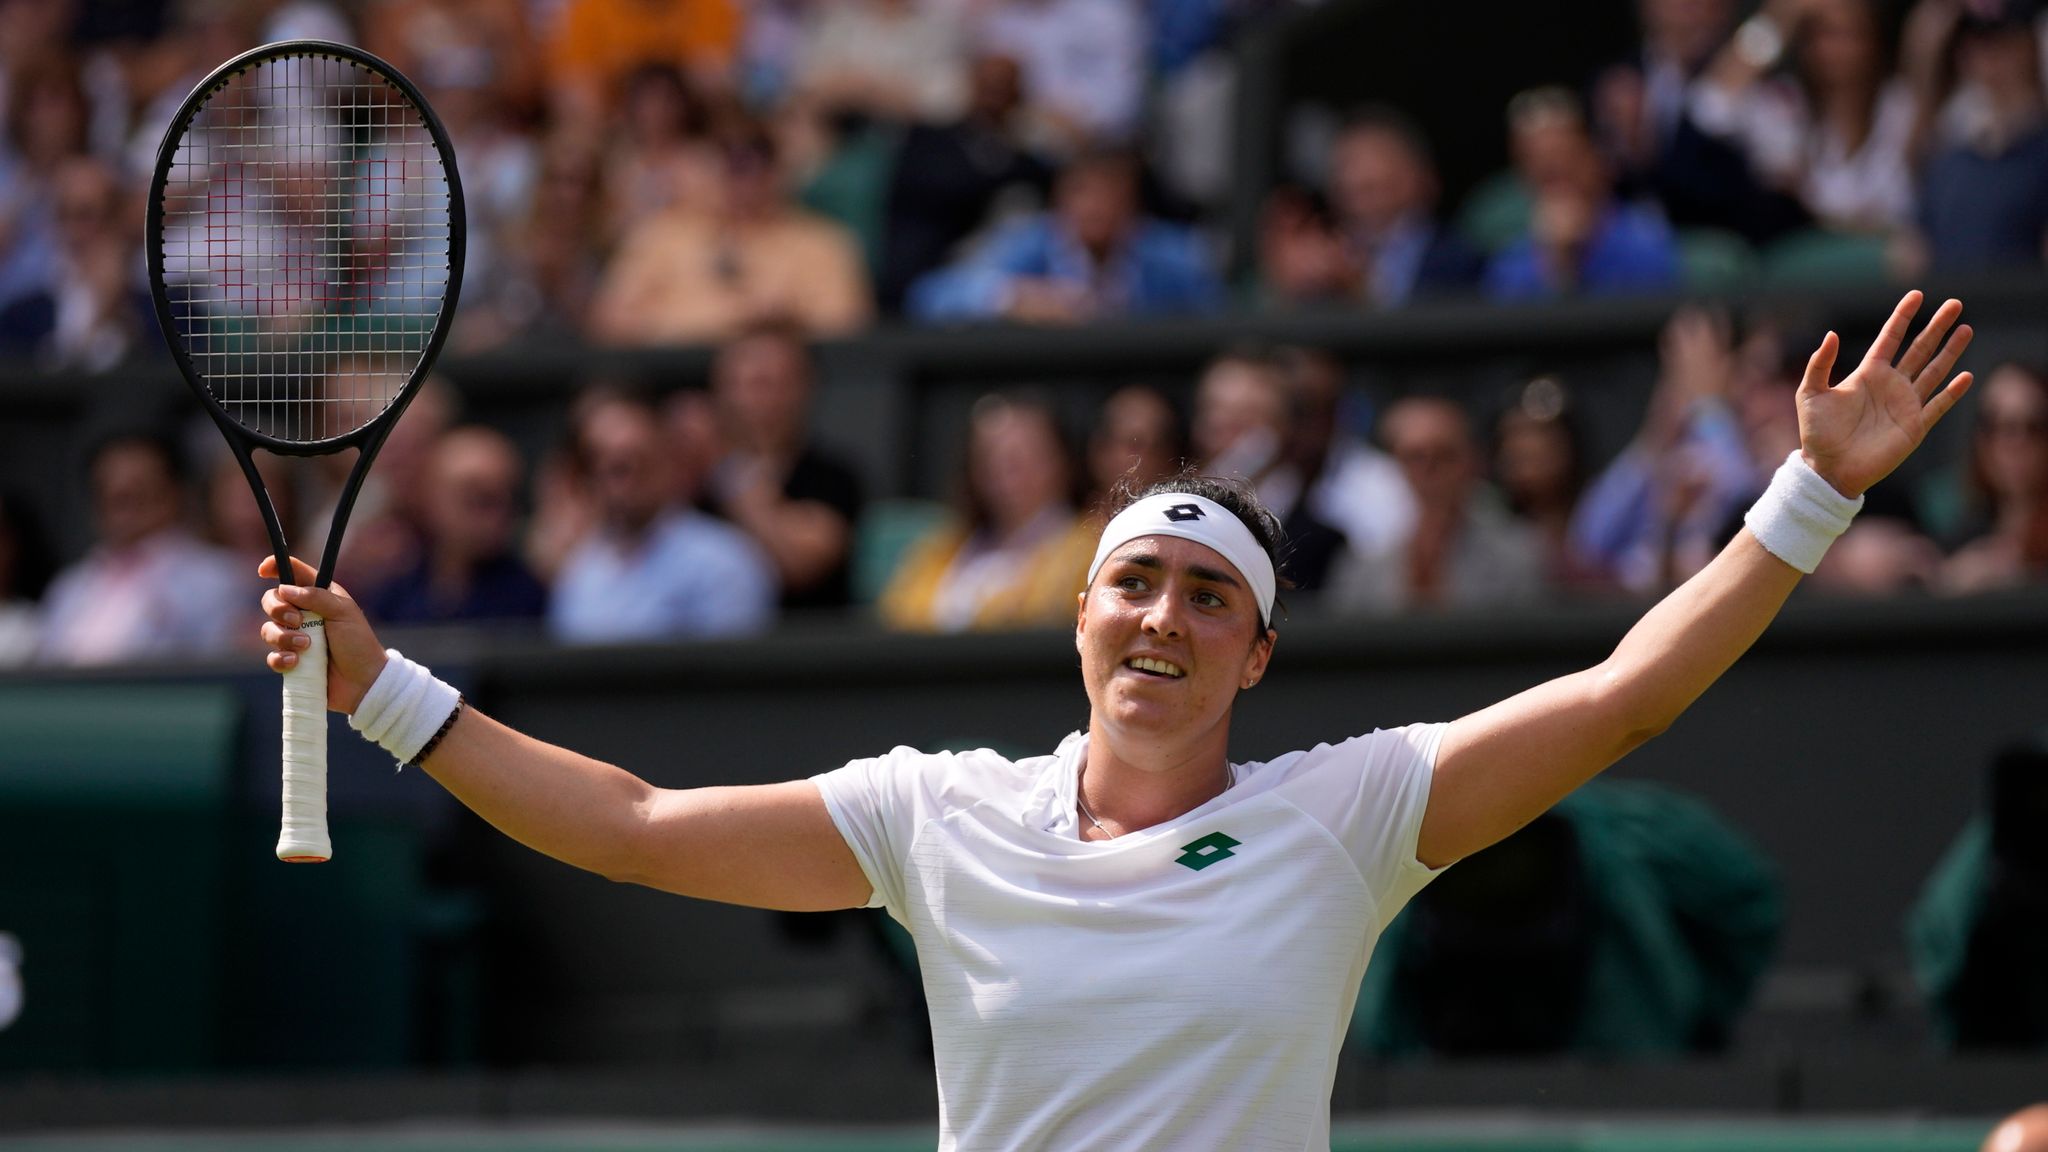 Wimbledon 2022 Draws LIVE: Wimbledon draws out, Top seed Novak Djokovic and Carlos Alcaraz in same quarter, Iga Swiatek likely to face Jessica Pegula in quarterfinal, - Follow LIVE